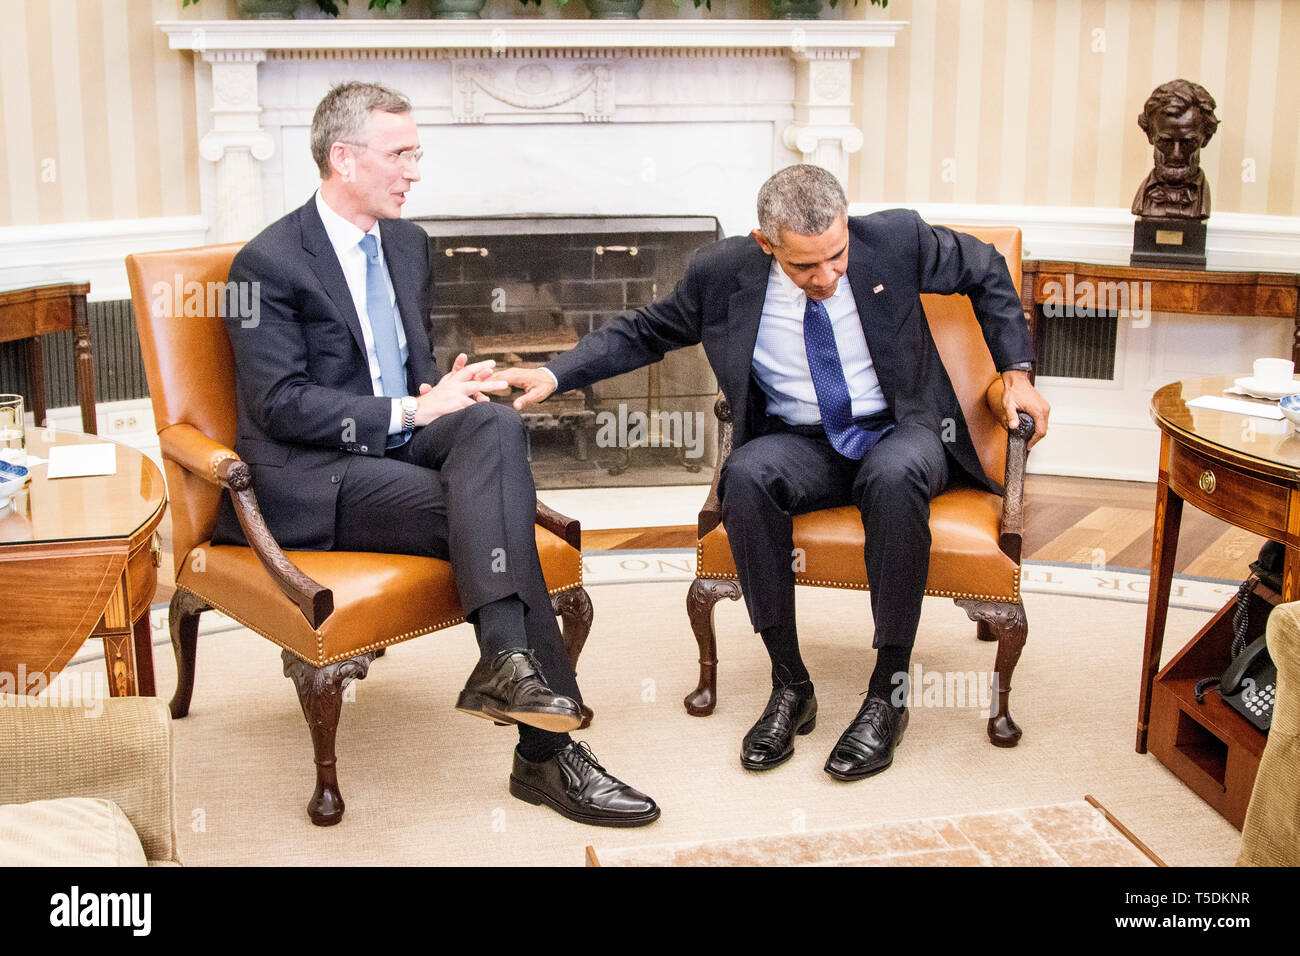 Secretary General in NATO, Mr. Jens Stoltenberg, visits the White House and the US President Barack Obama. Stock Photo